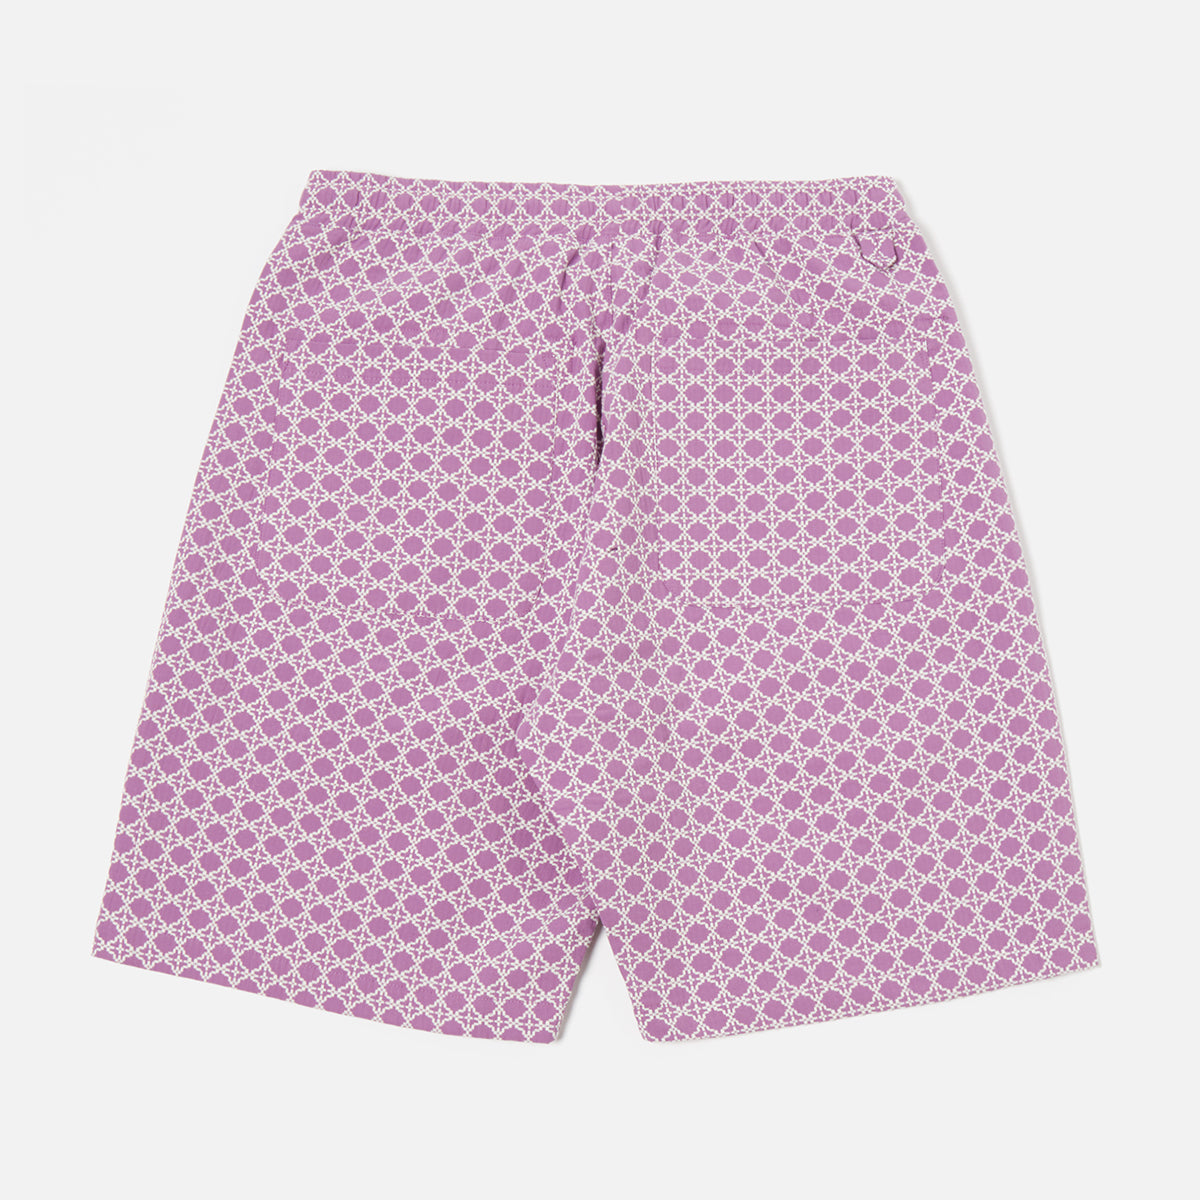 Lumber Shorts - Lilac Tile Cotton